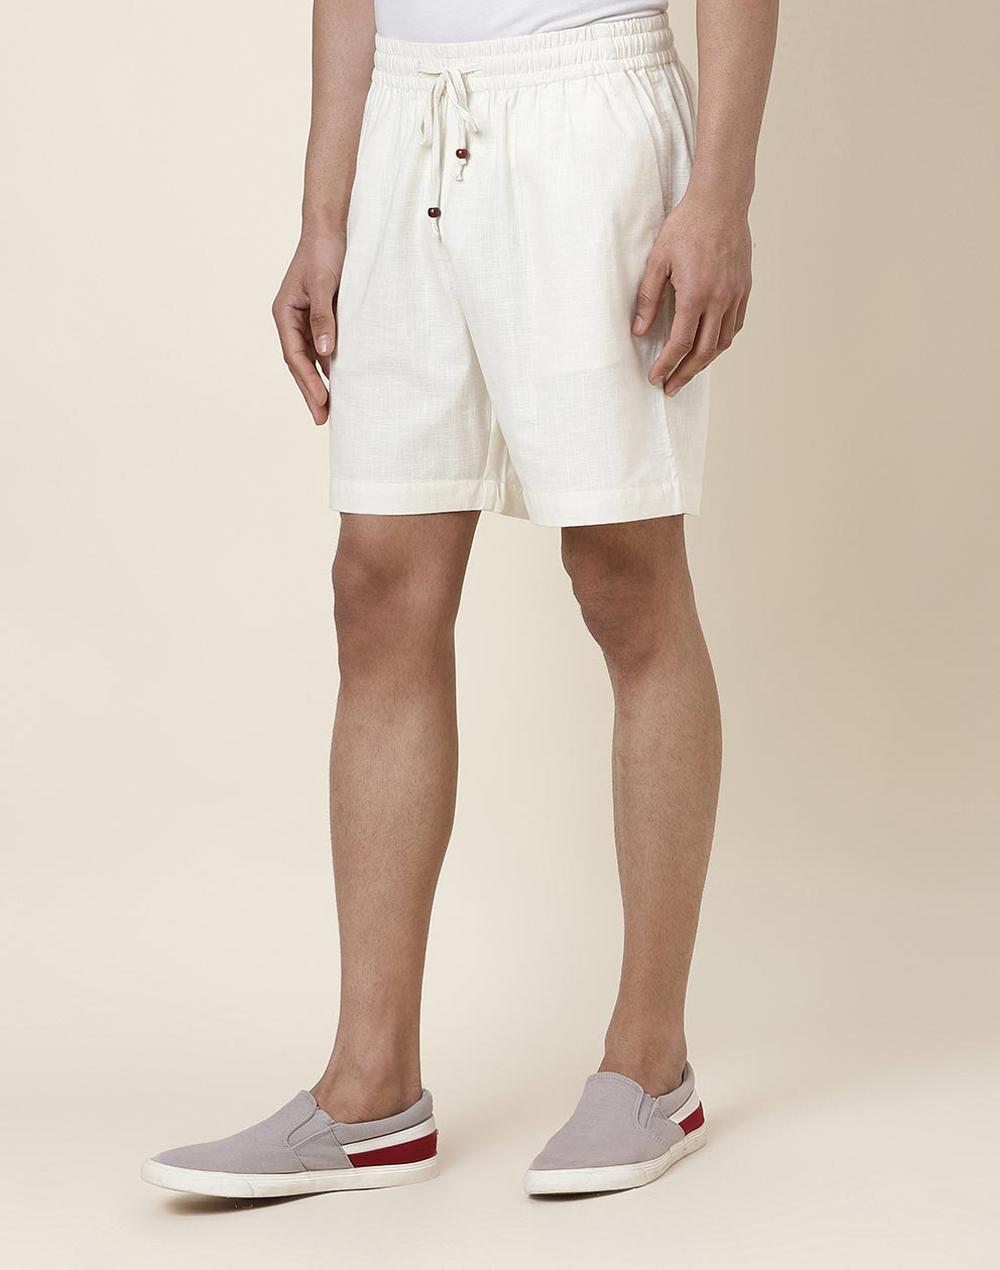 off-white-cotton-knee-length-drawstring-shorts